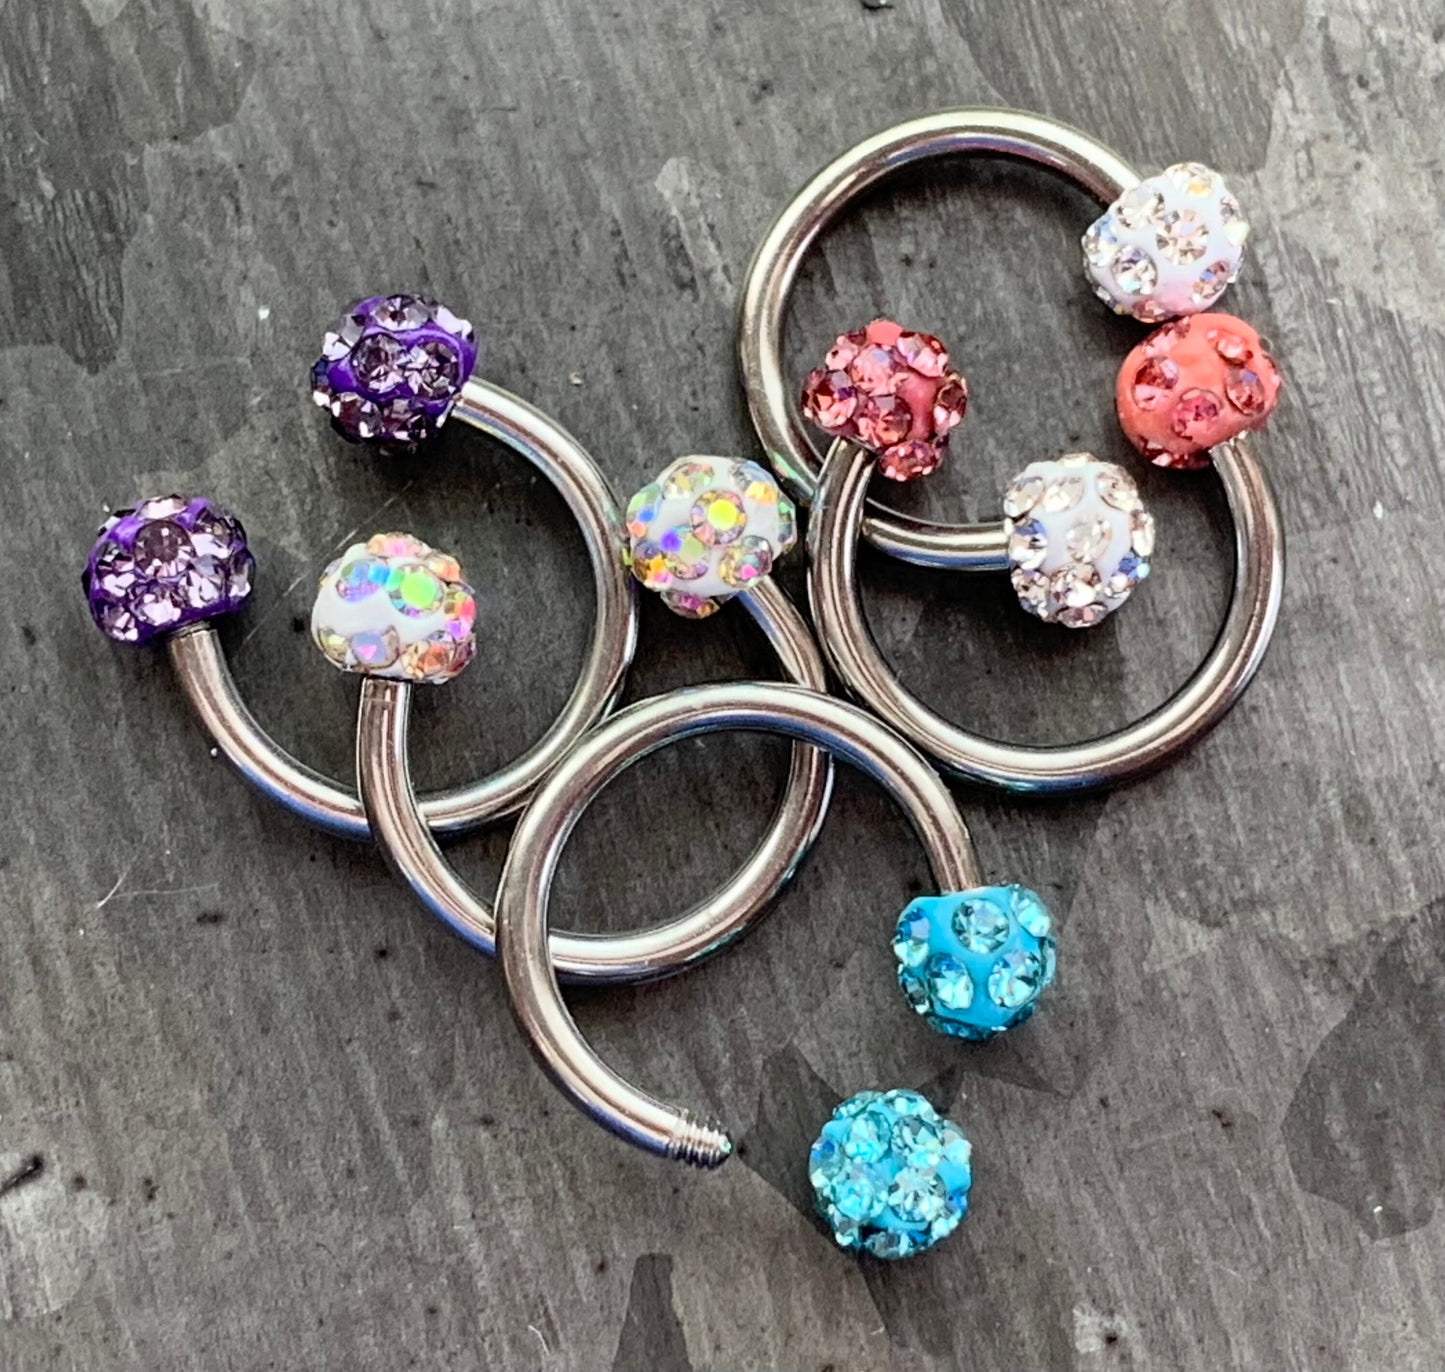 1 Piece Crystal Paved Ferido Balls Horseshoe Circular Septum Ring - 16g, 8mm - Aurora Borealis, White, Pink, Blue or Purple Available!